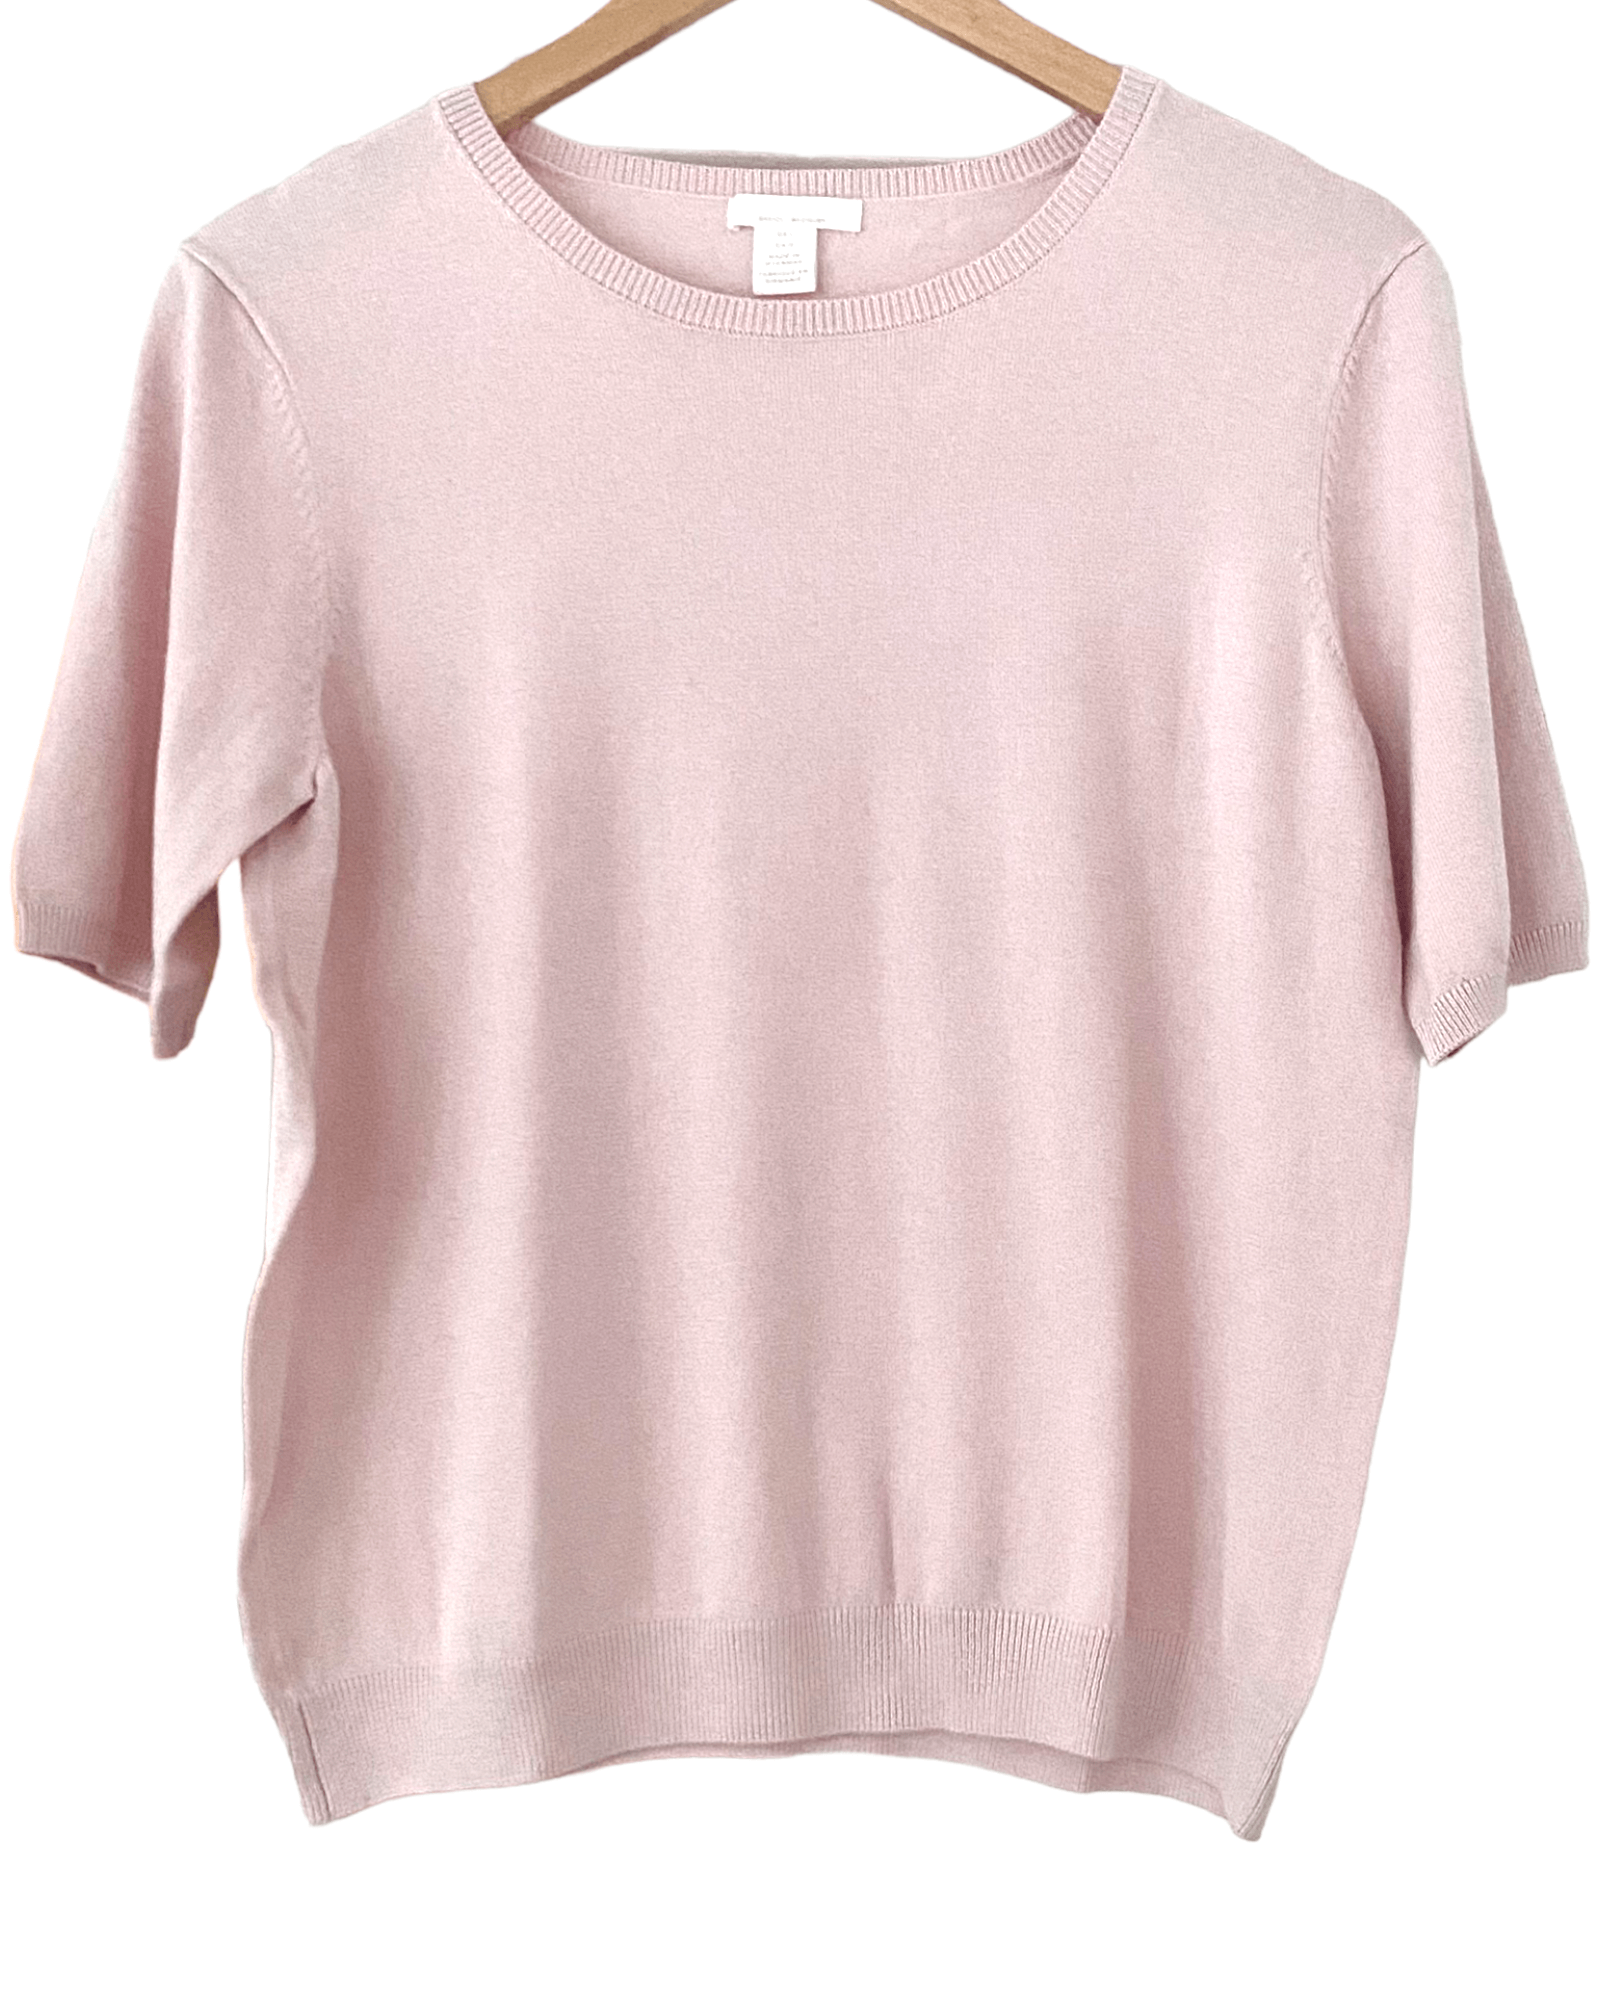 Soft Summer H&M pink fine knit sweater